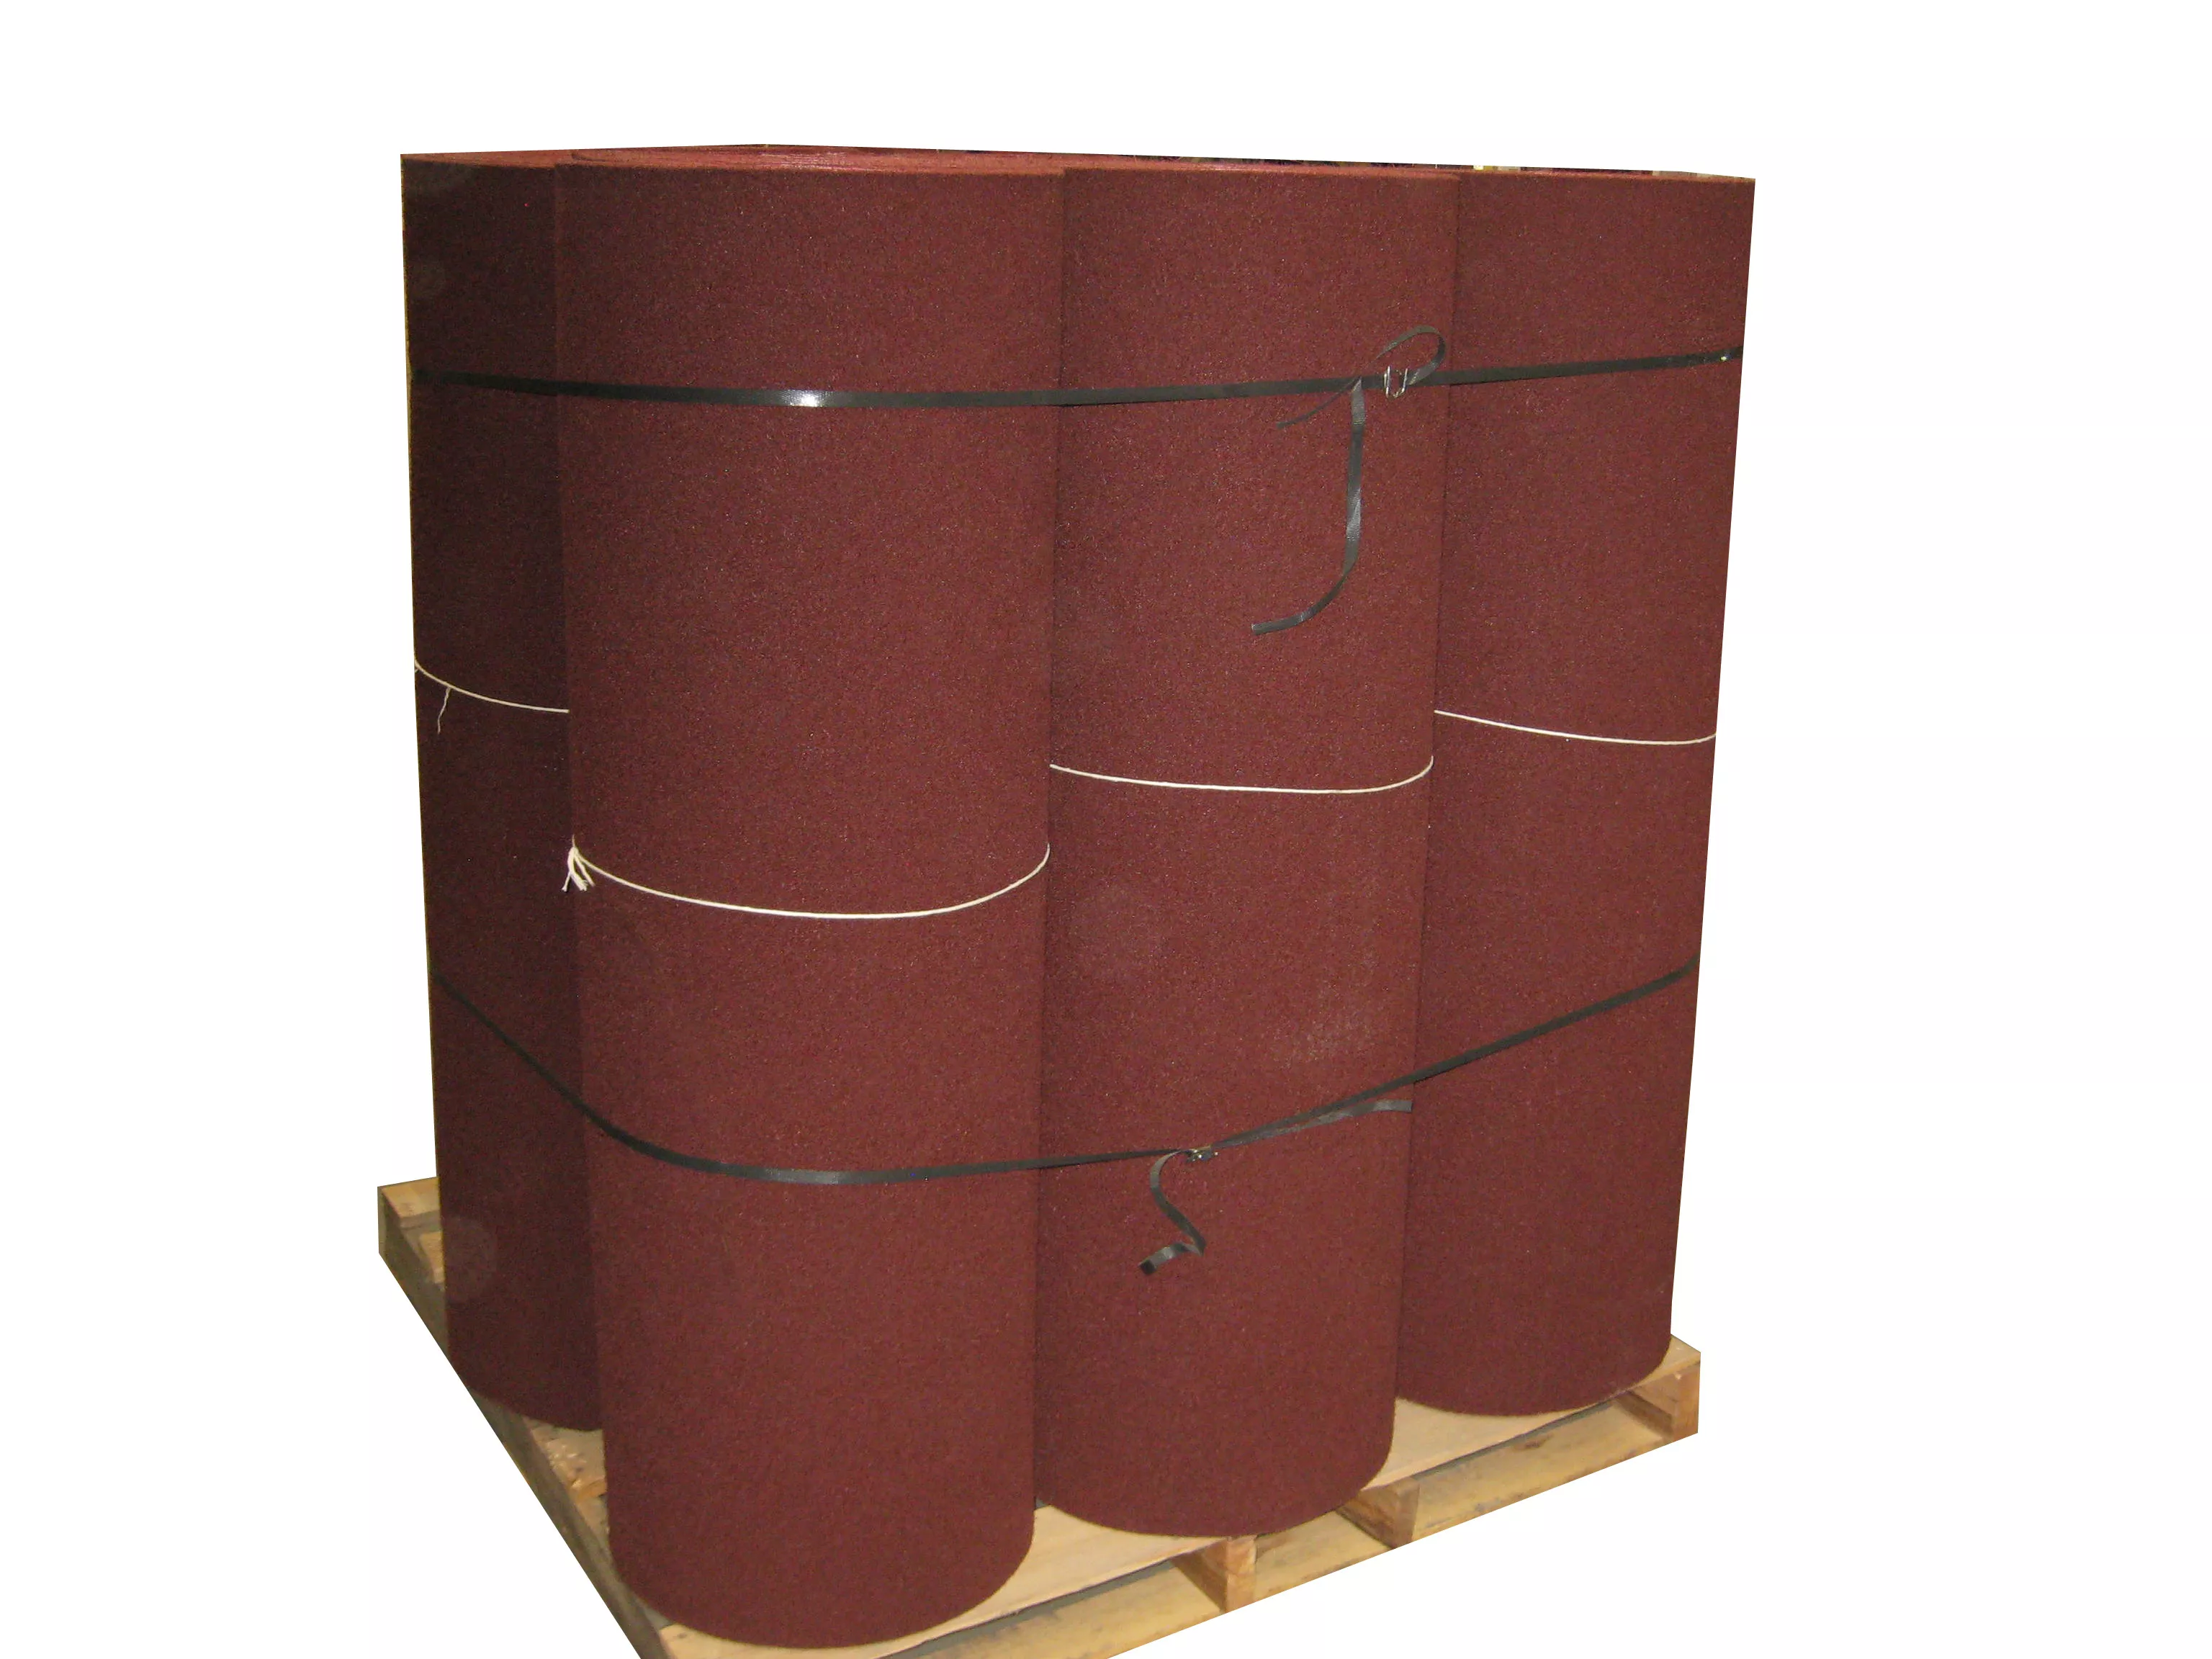 Standard Abrasives™ Surface Conditioning GP Roll, 15713, SC-GP, A/O
Medium, 50 in x 25 yd, Jumbo